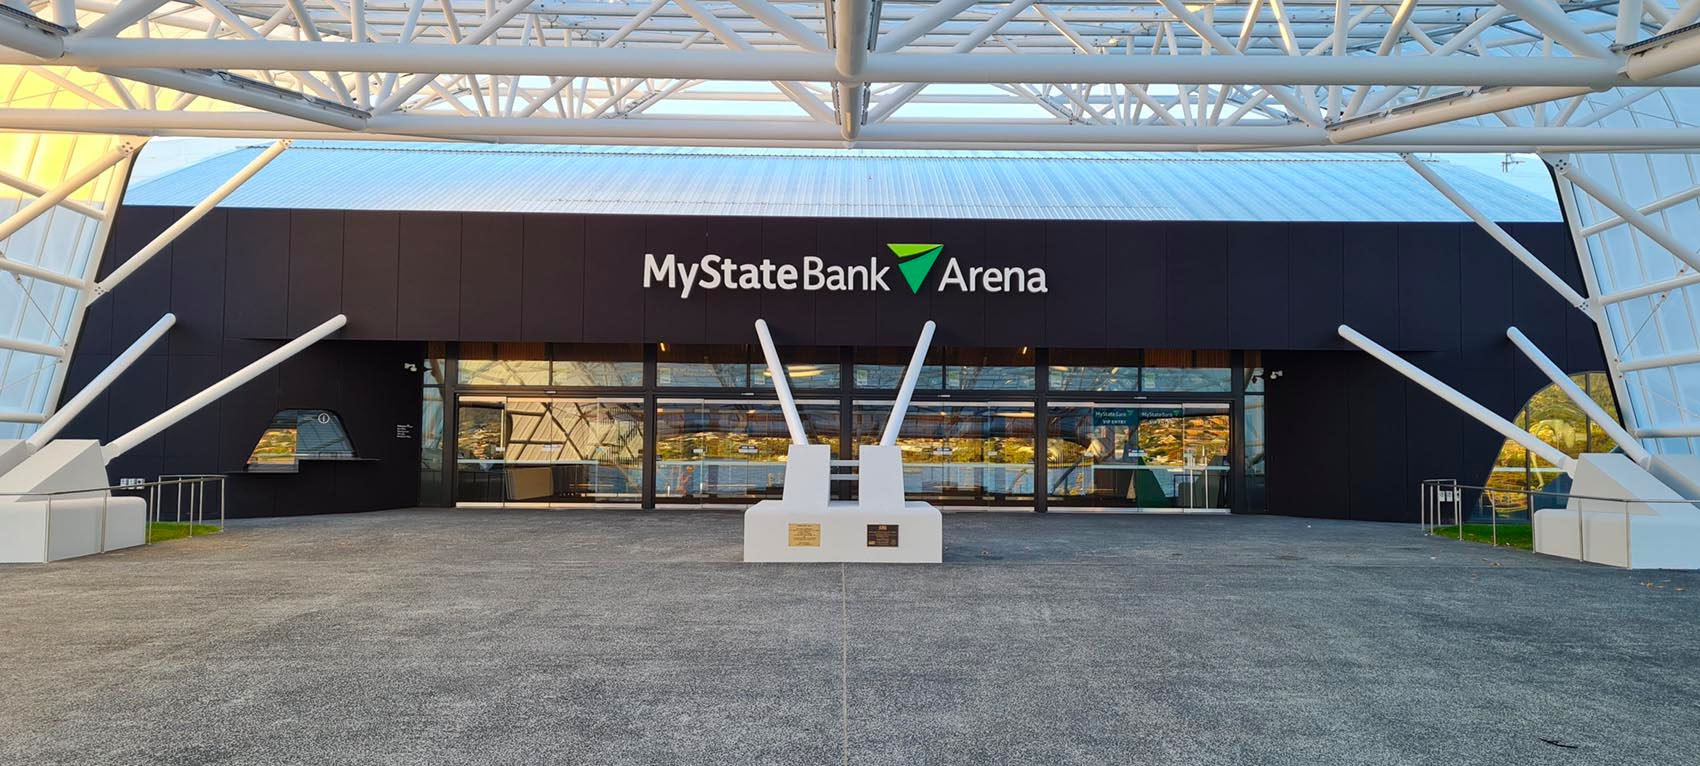 MyState Bank Arena